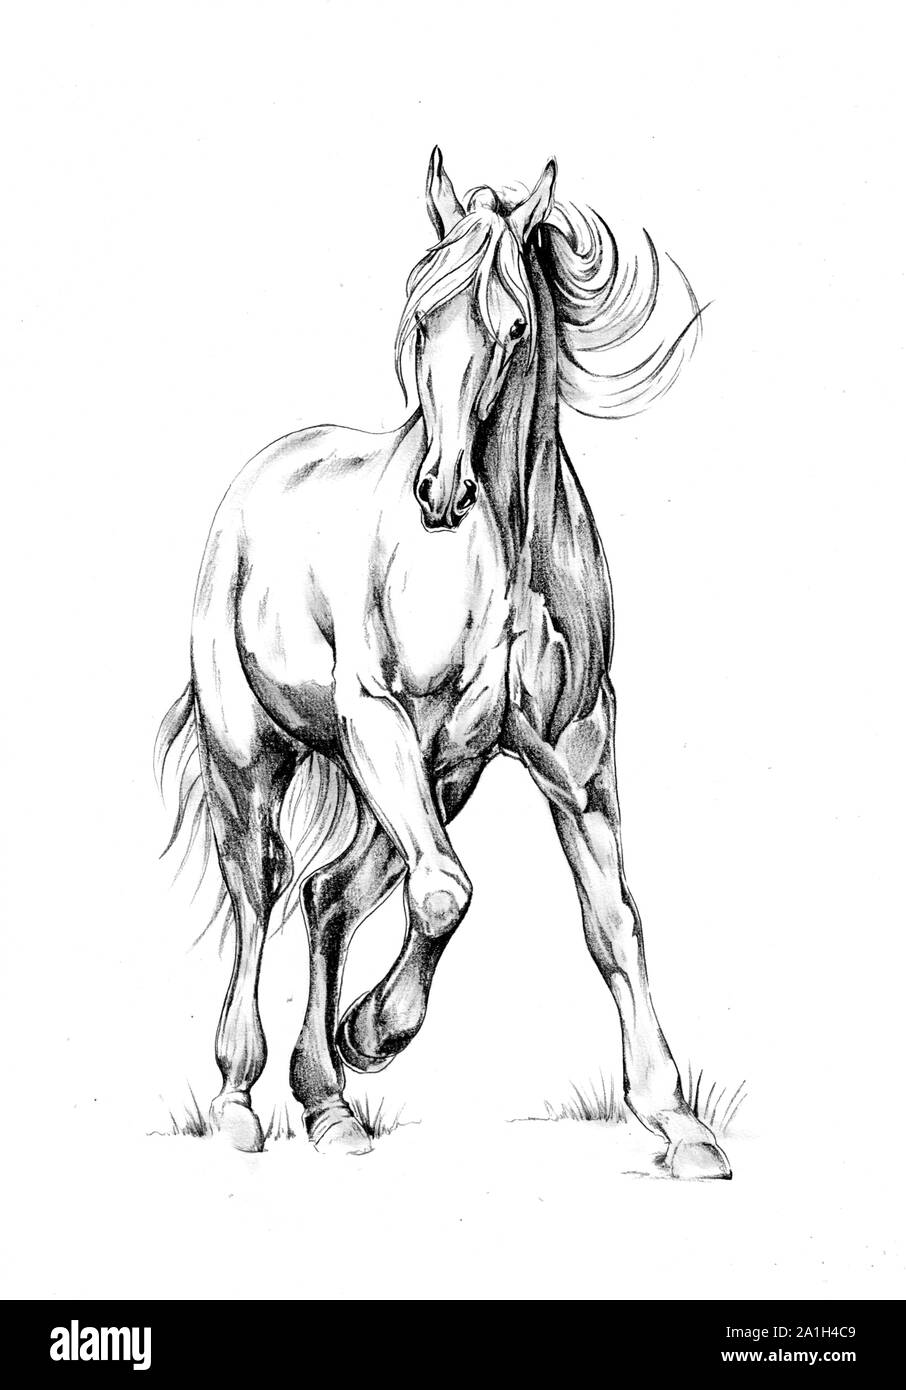 Horse drawing sketch art handmade Stock Photo - Alamy